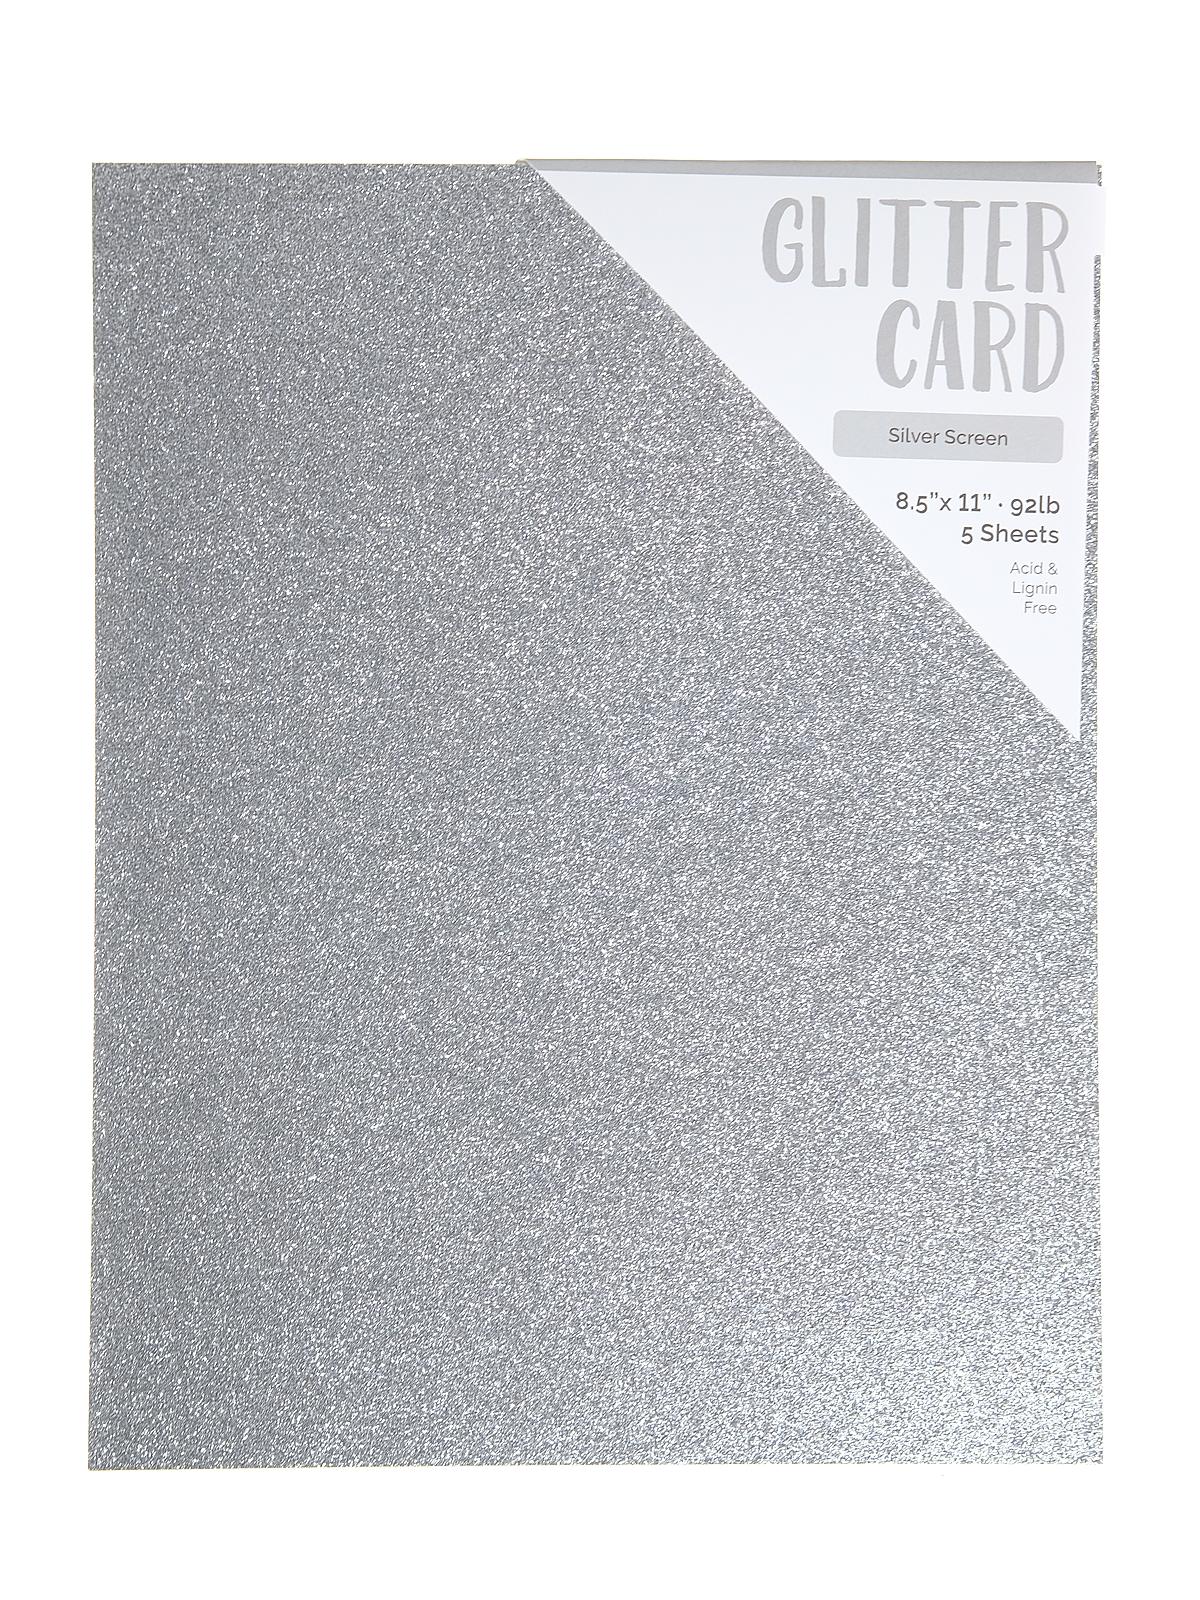 Craft Perfect Glitter Card Silver Screen 8 1 2 In. X 11 In. Pack Of 5